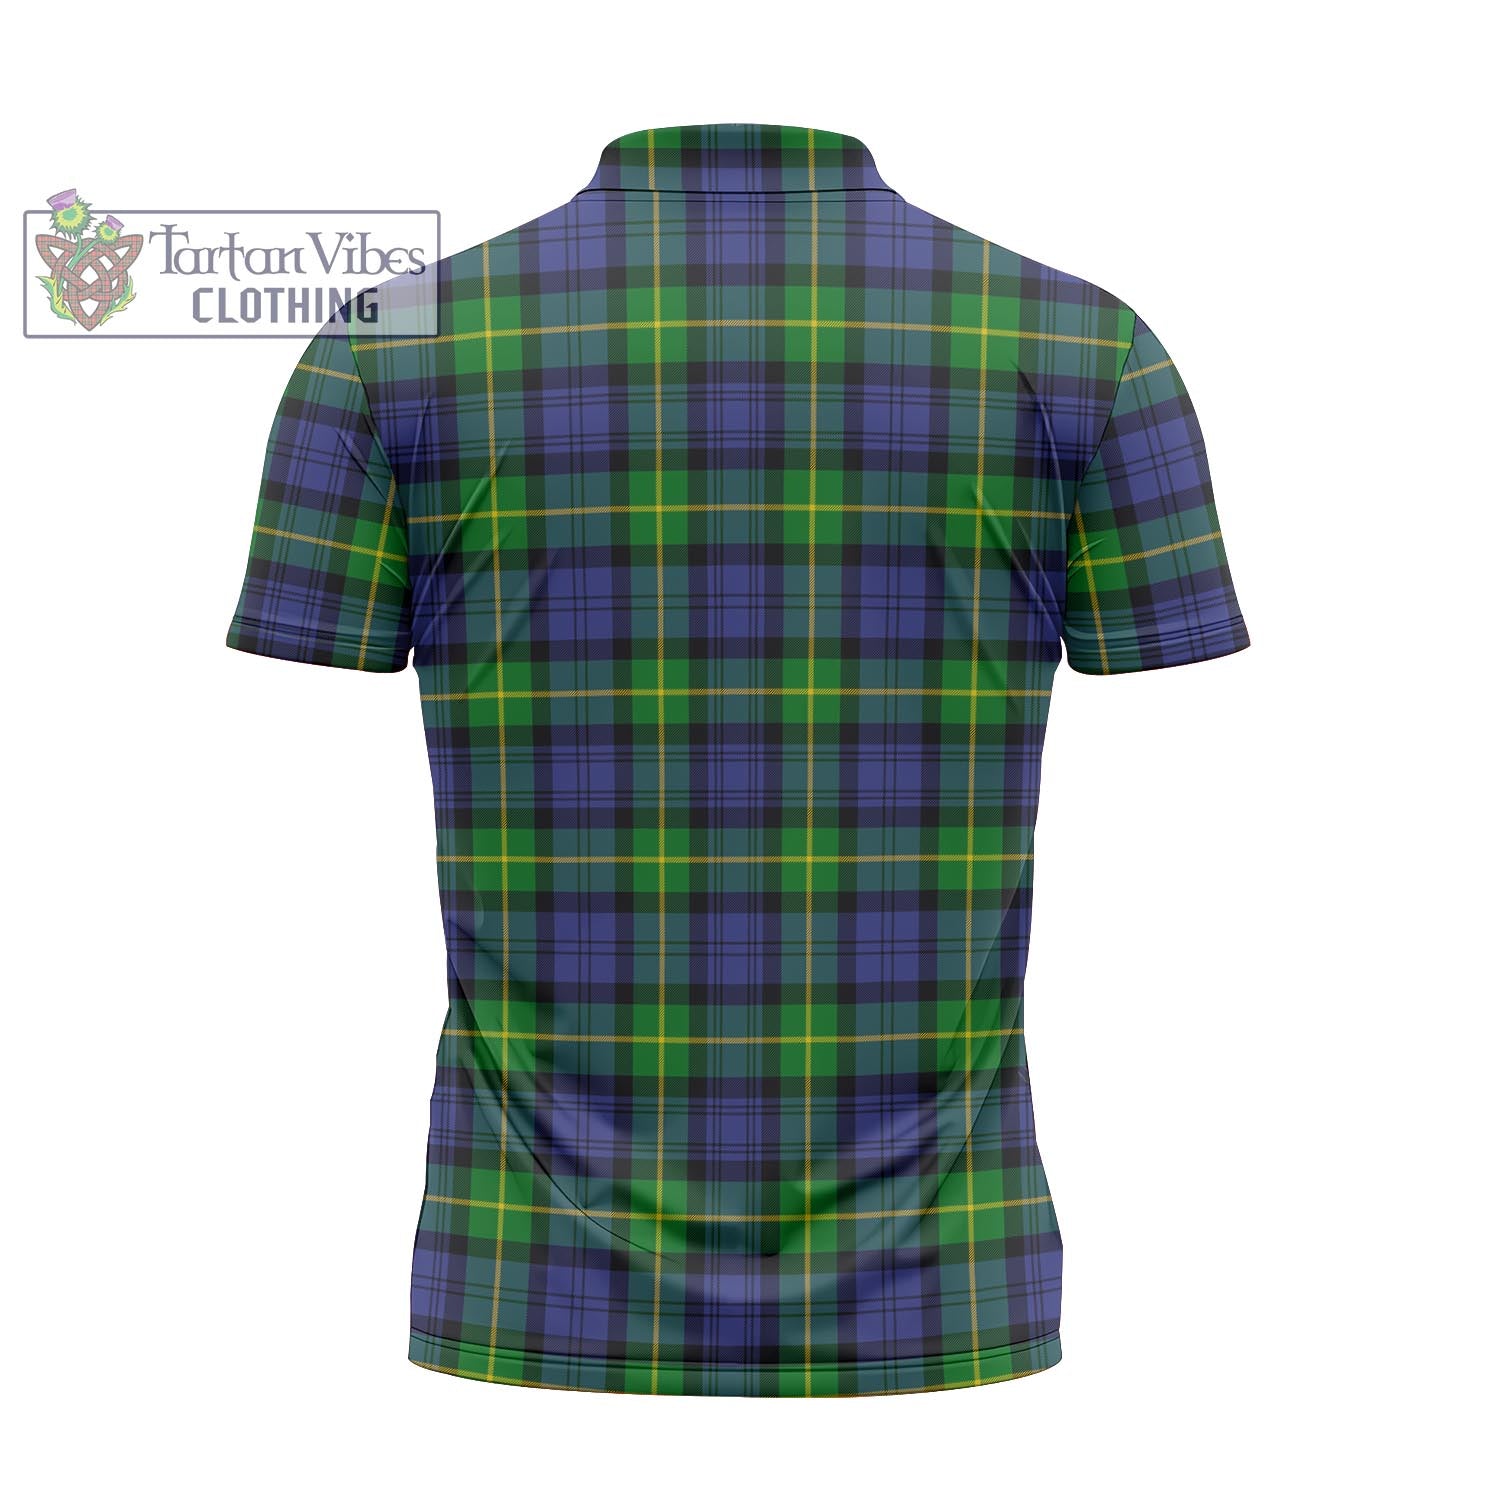 Tartan Vibes Clothing Meldrum Tartan Zipper Polo Shirt with Family Crest